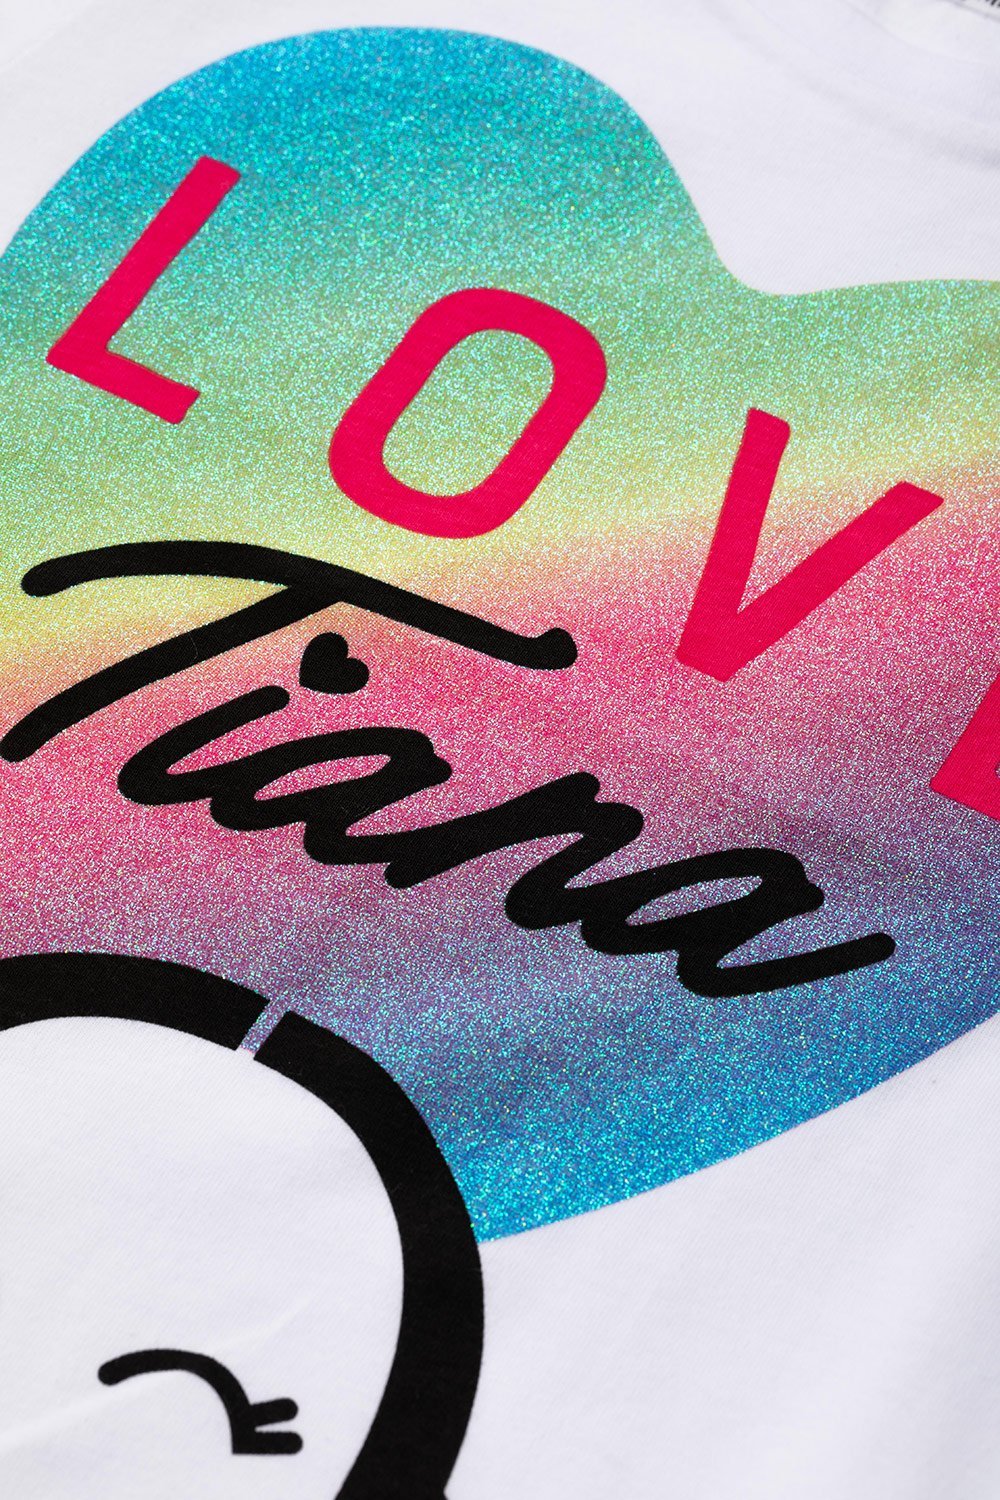 Hearts By Tiana Girls Organic Cotton Pyjamas - Brand Threads